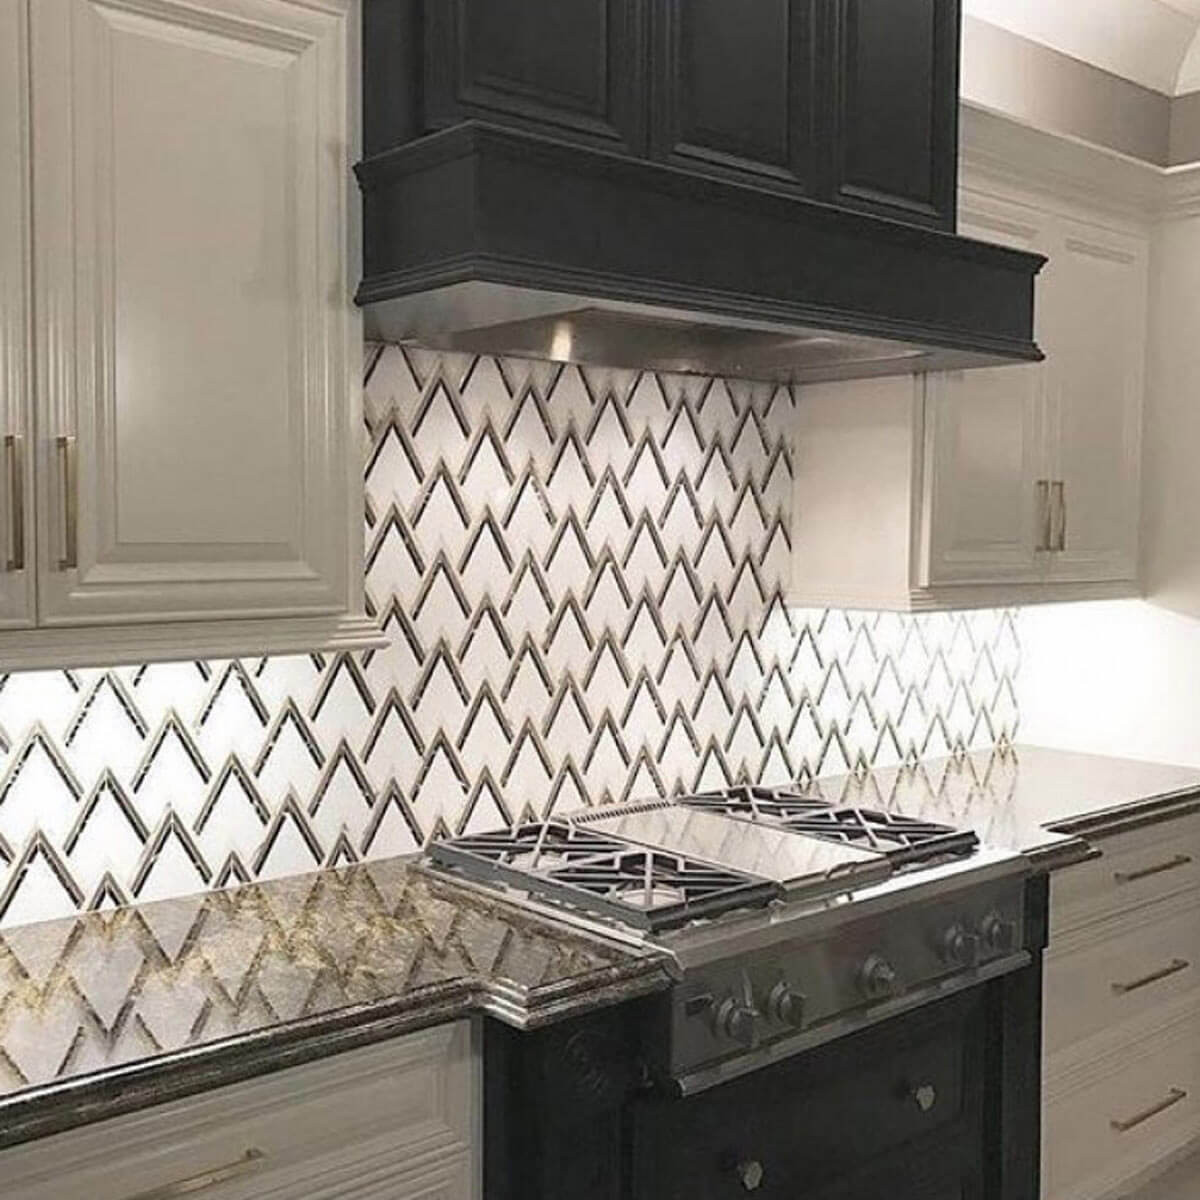 Kitchen Tile Backsplash Pictures
 14 Showstopping Tile Backsplash Ideas To Suit Any Style